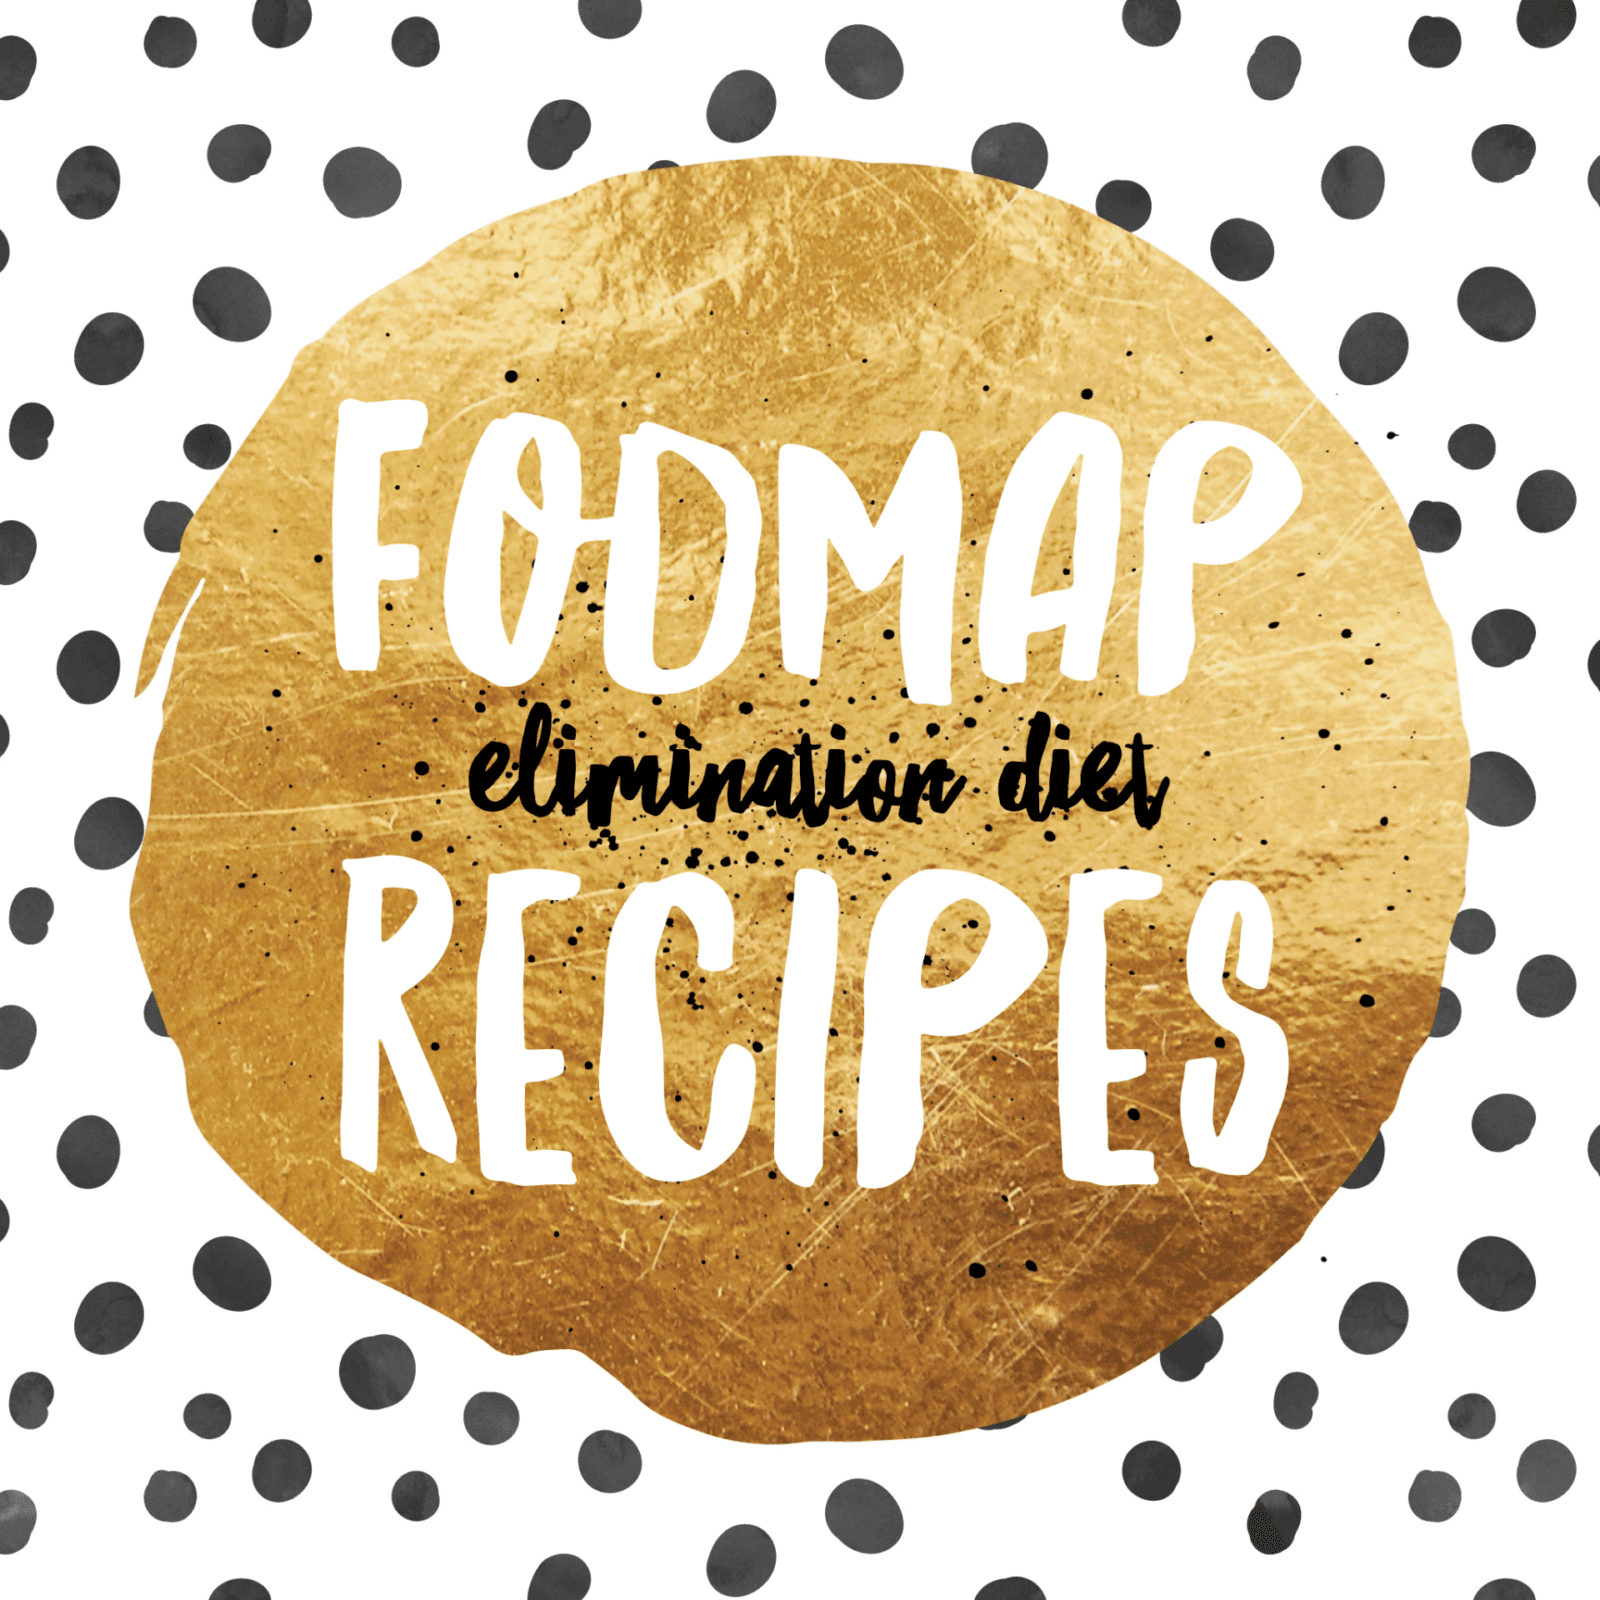 FODMAP Elimination Diet Recipes